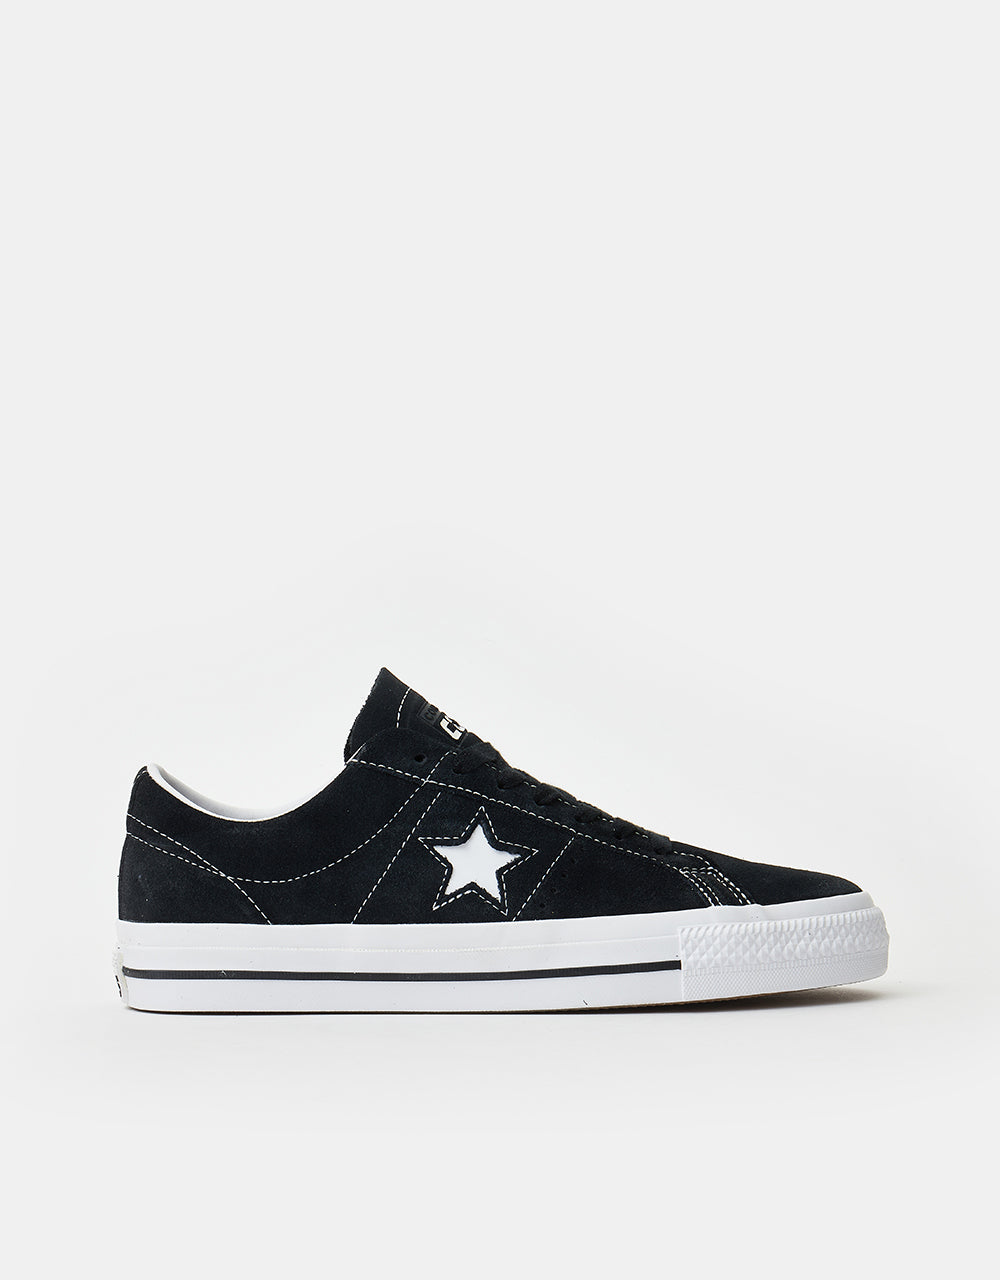 Converse One Star Pro Ox Skate Shoes - Black/White/White